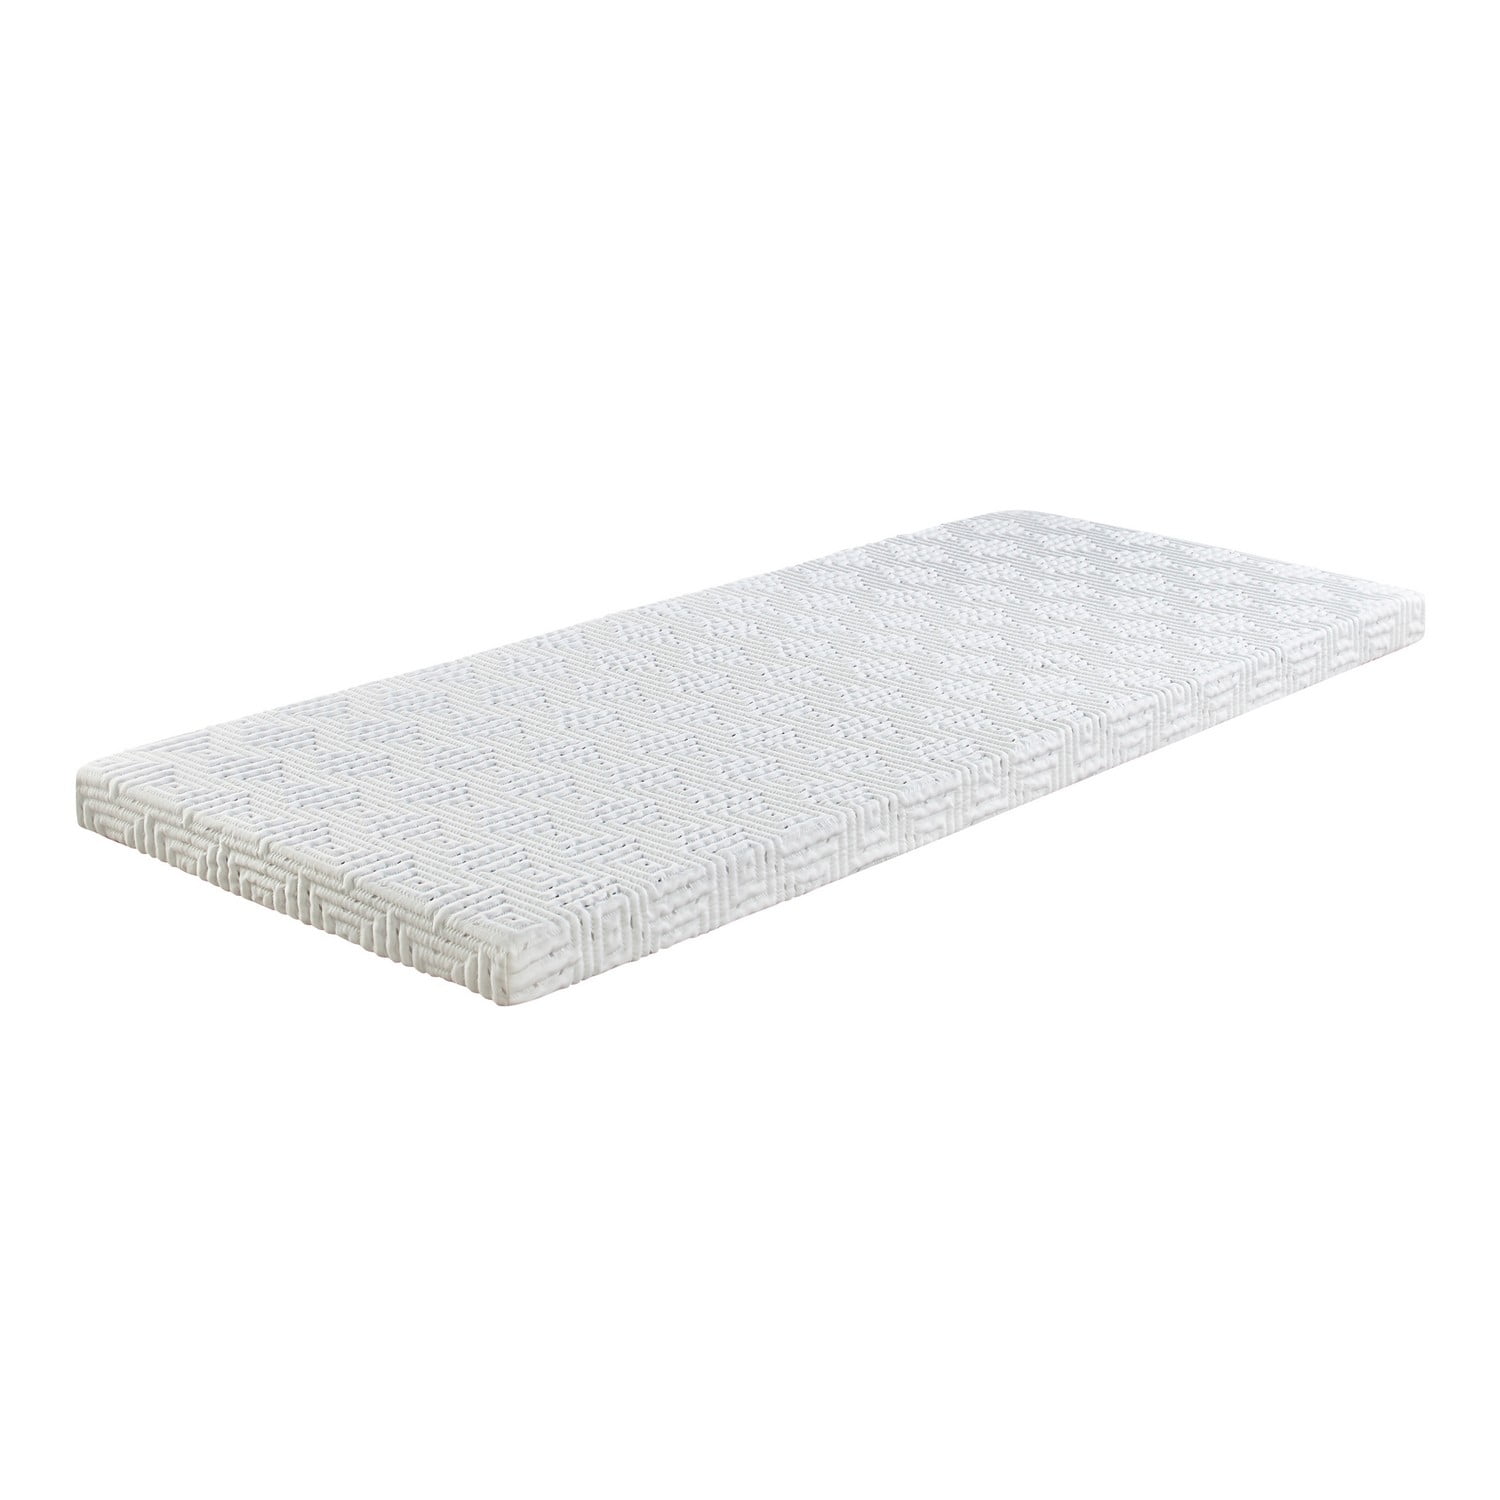 Broyhill Roll and Store Memory Foam Mattress: Roll-Up Guest Bed/Floor Mat, 3